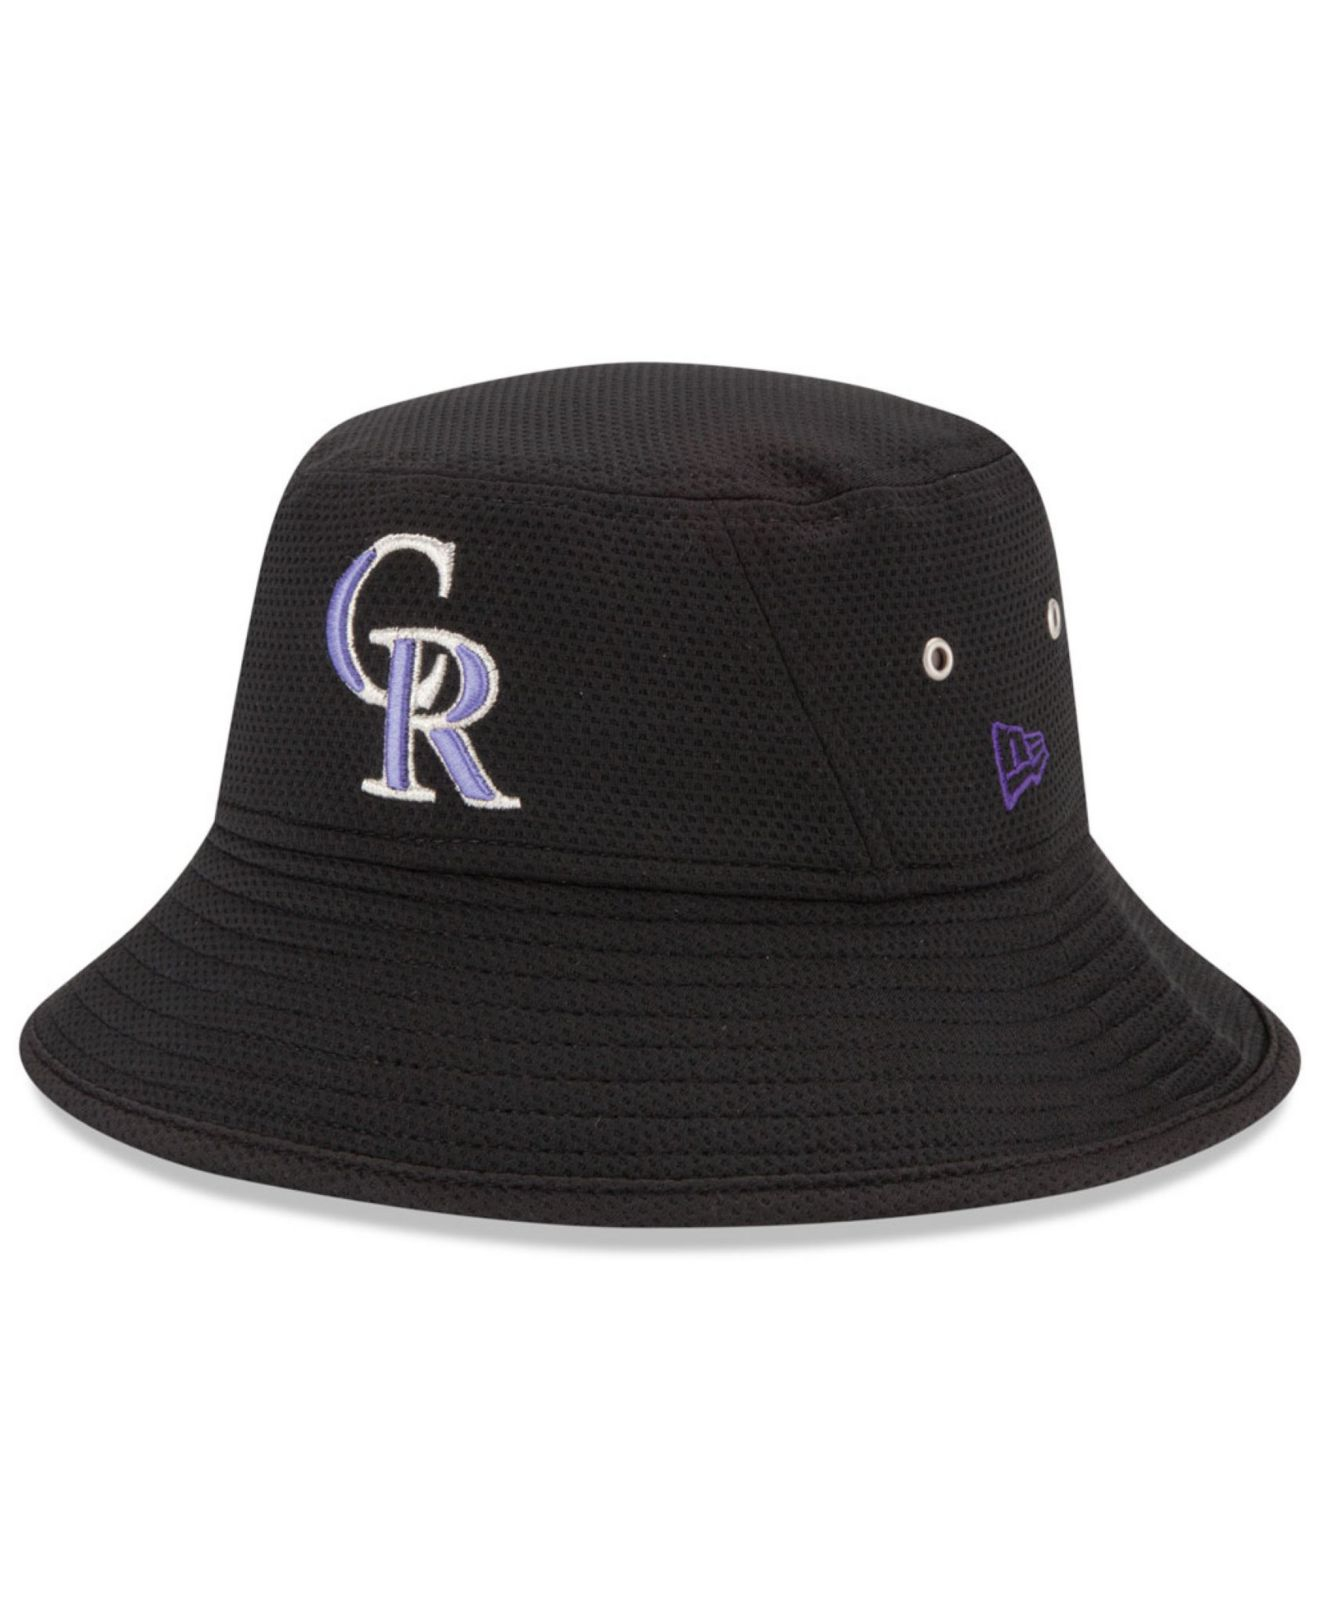 Lyst - Ktz Colorado Rockies Team Redux Bucket Hat in Black for Men